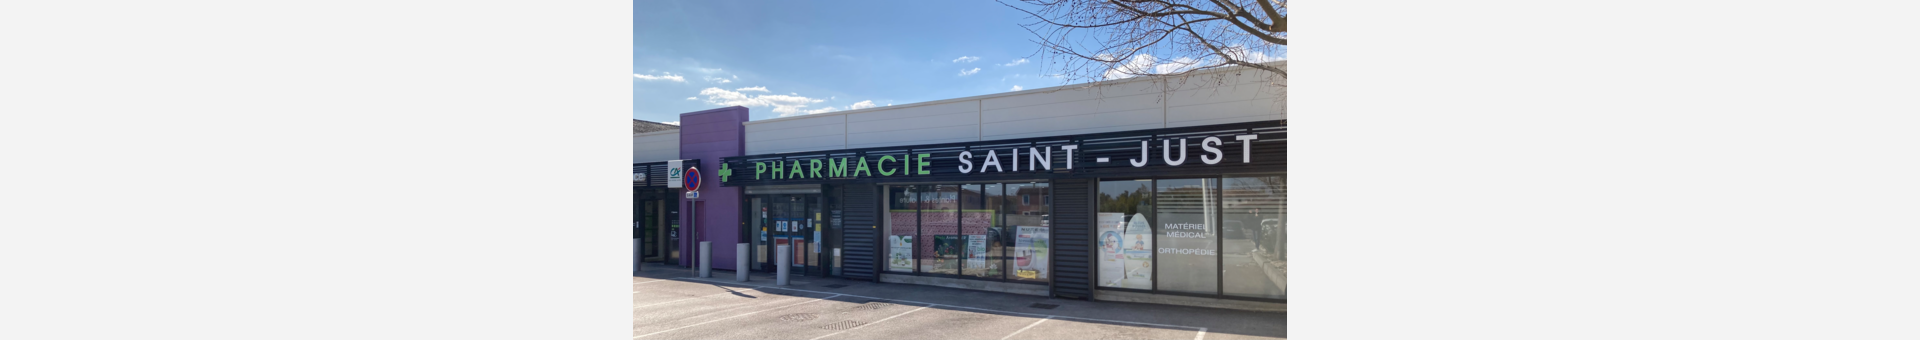 Pharmacie Saint-Just,Saint-Just-d'Ardèche